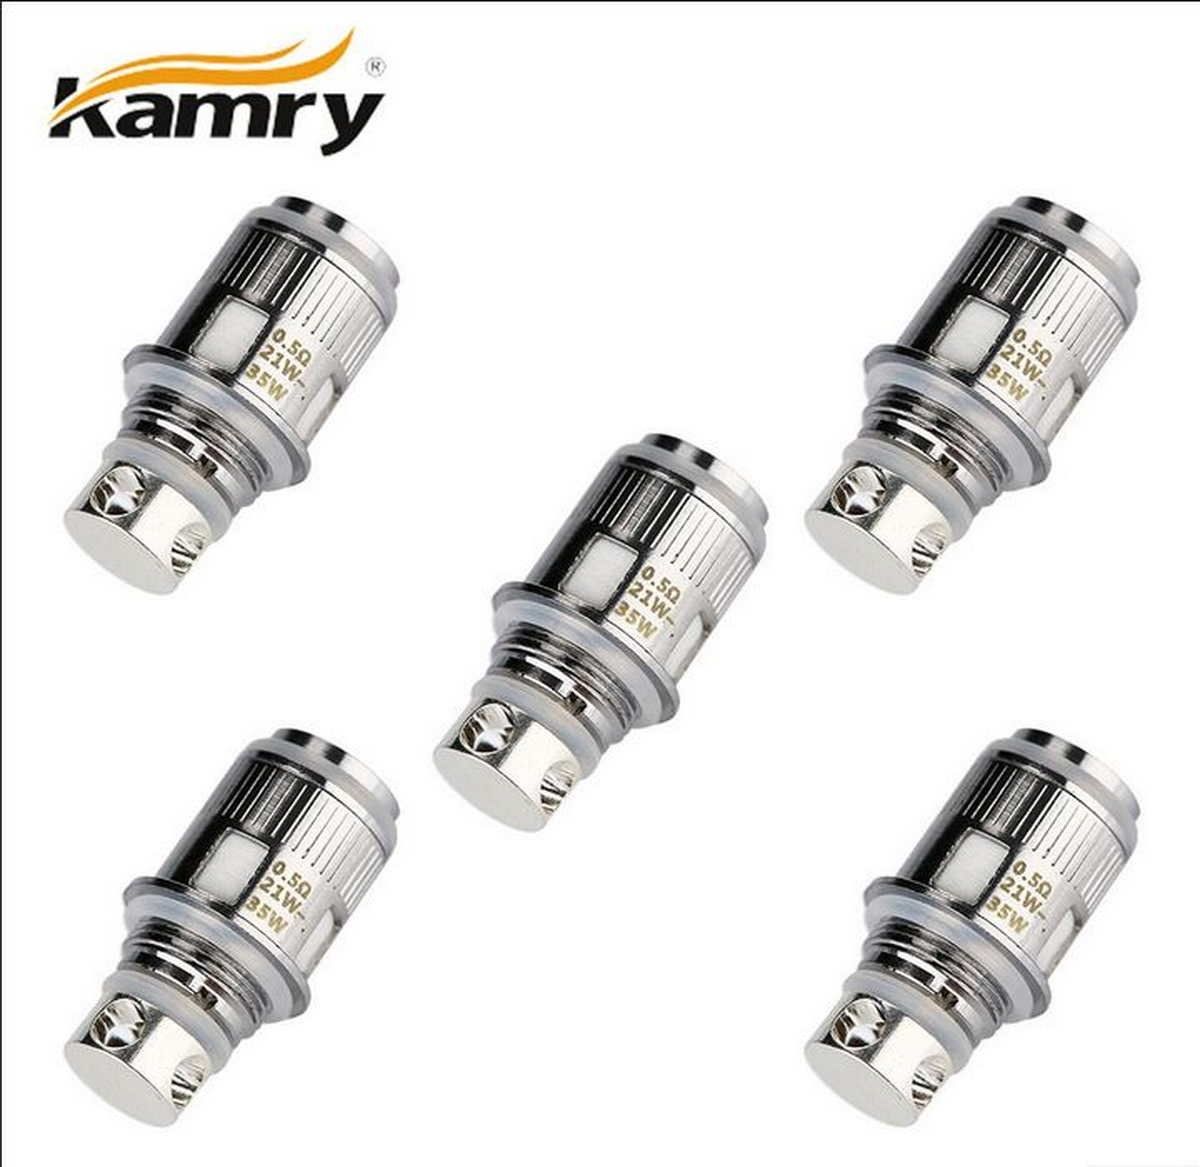 KamryTech Kamry K1000 Plus Replacement Coil комплект 5шт